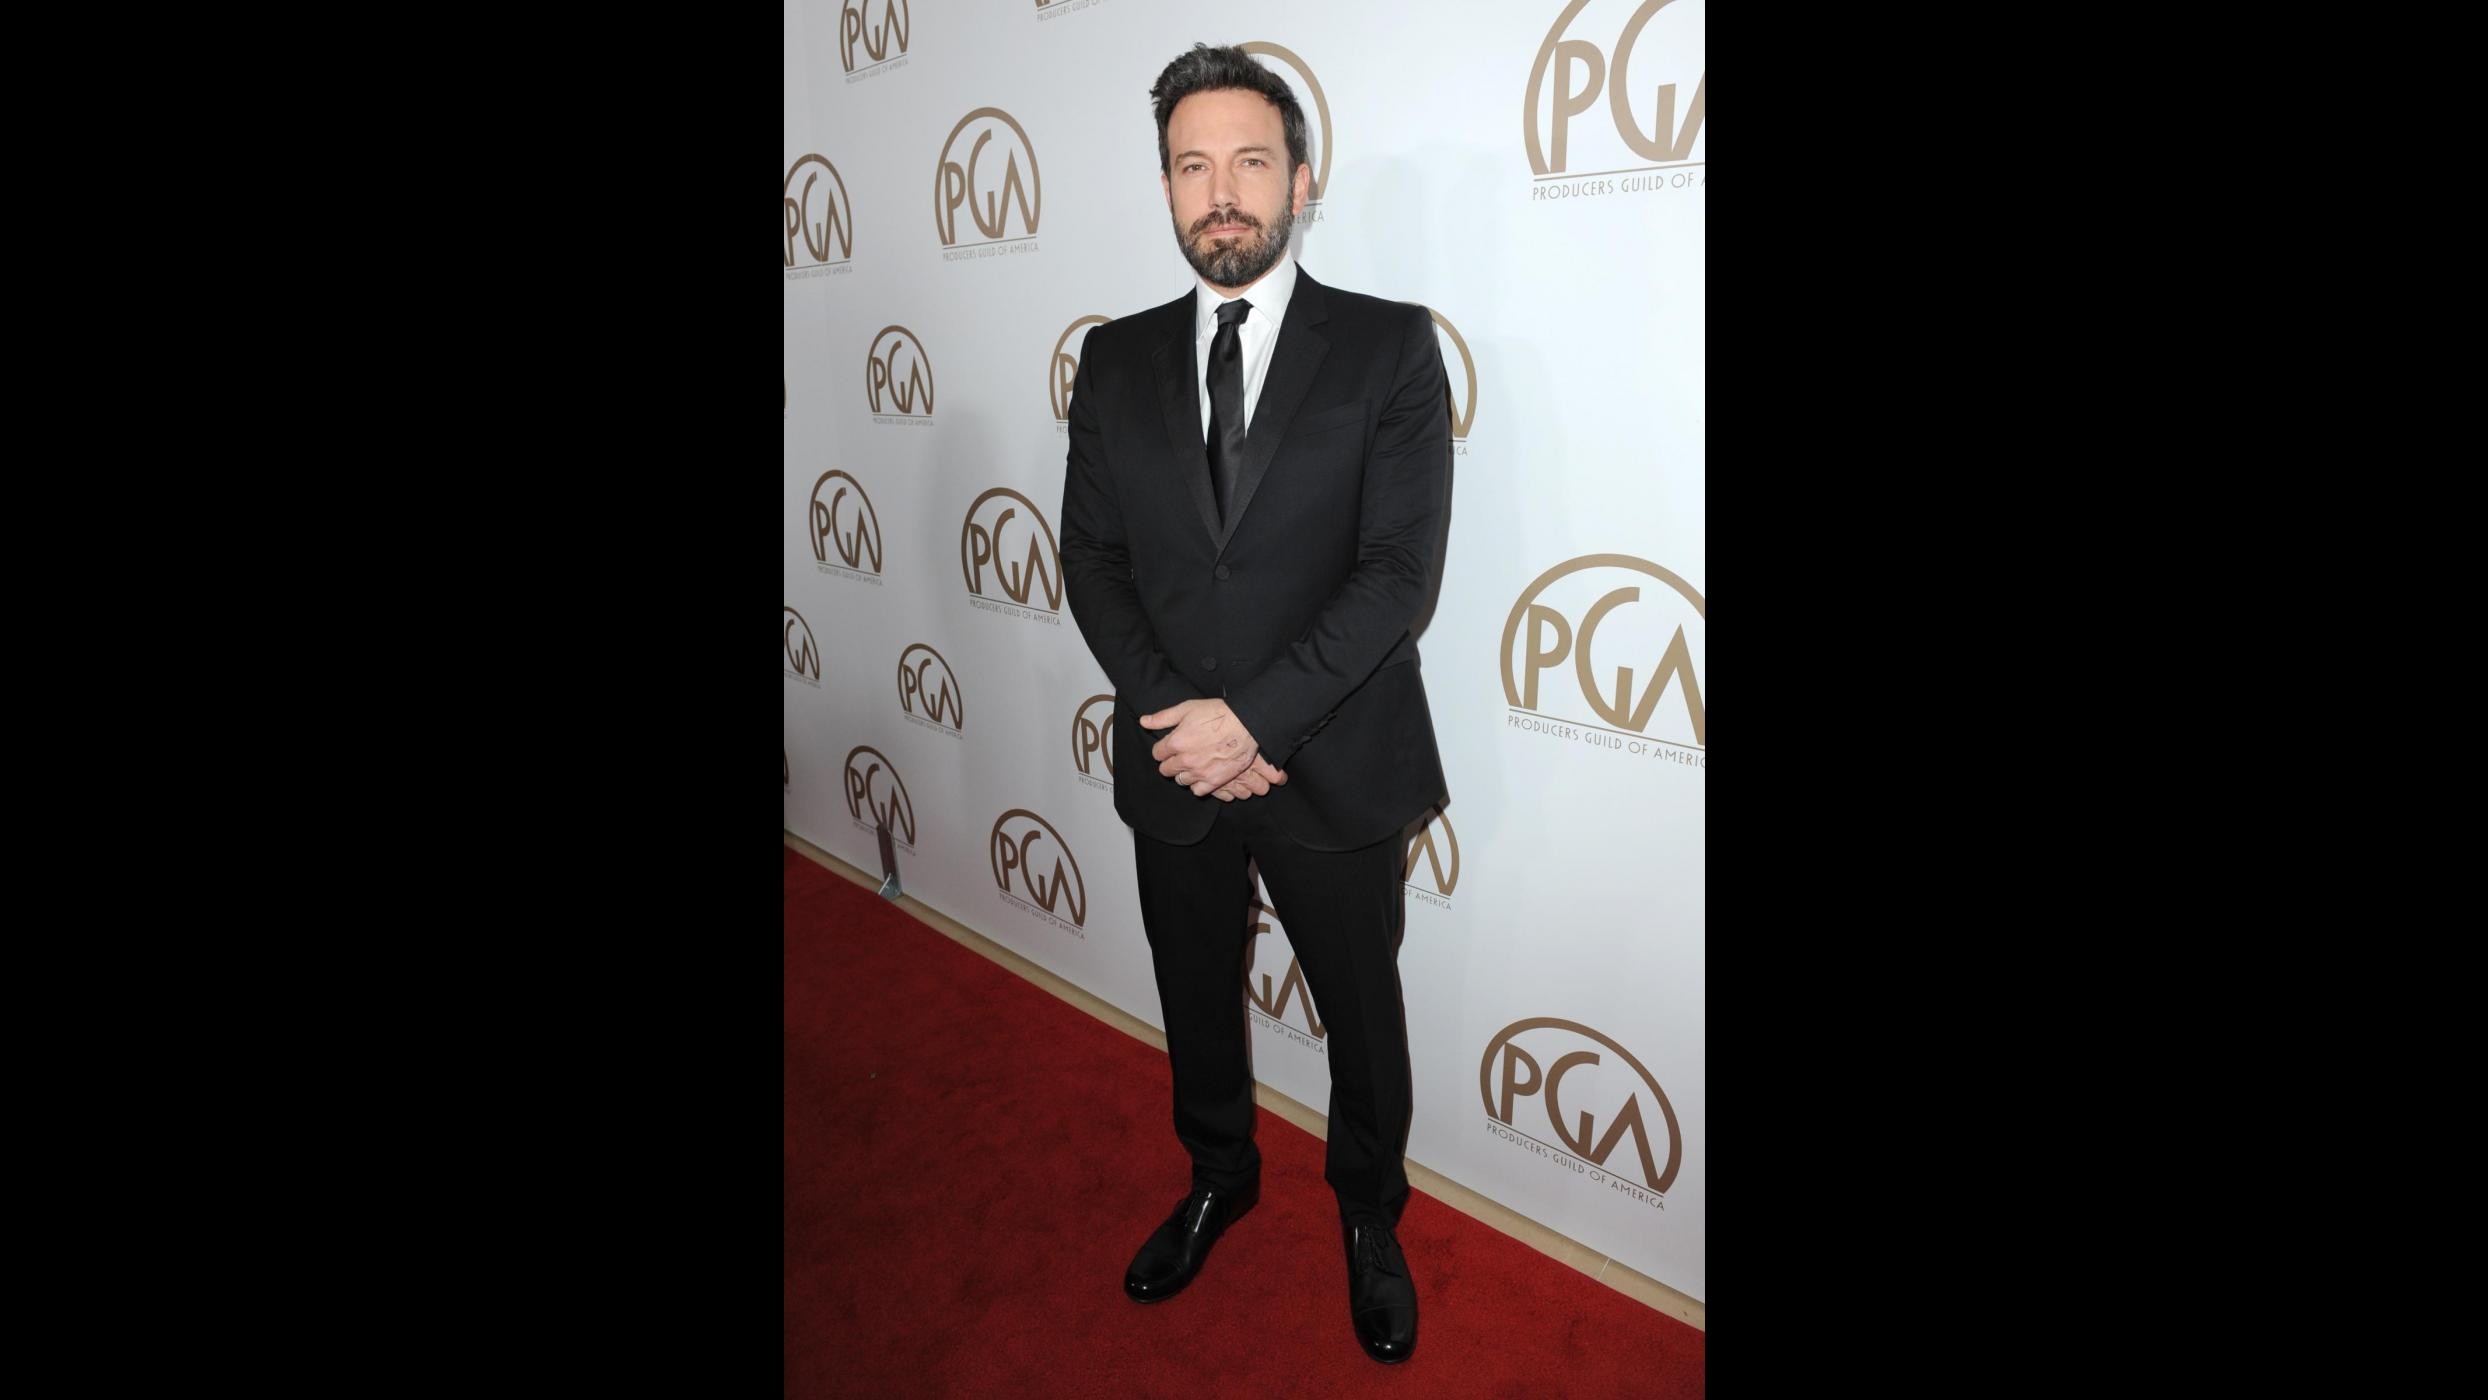 Ben Affleck vince Dga Awards per regia film ‘Argo’